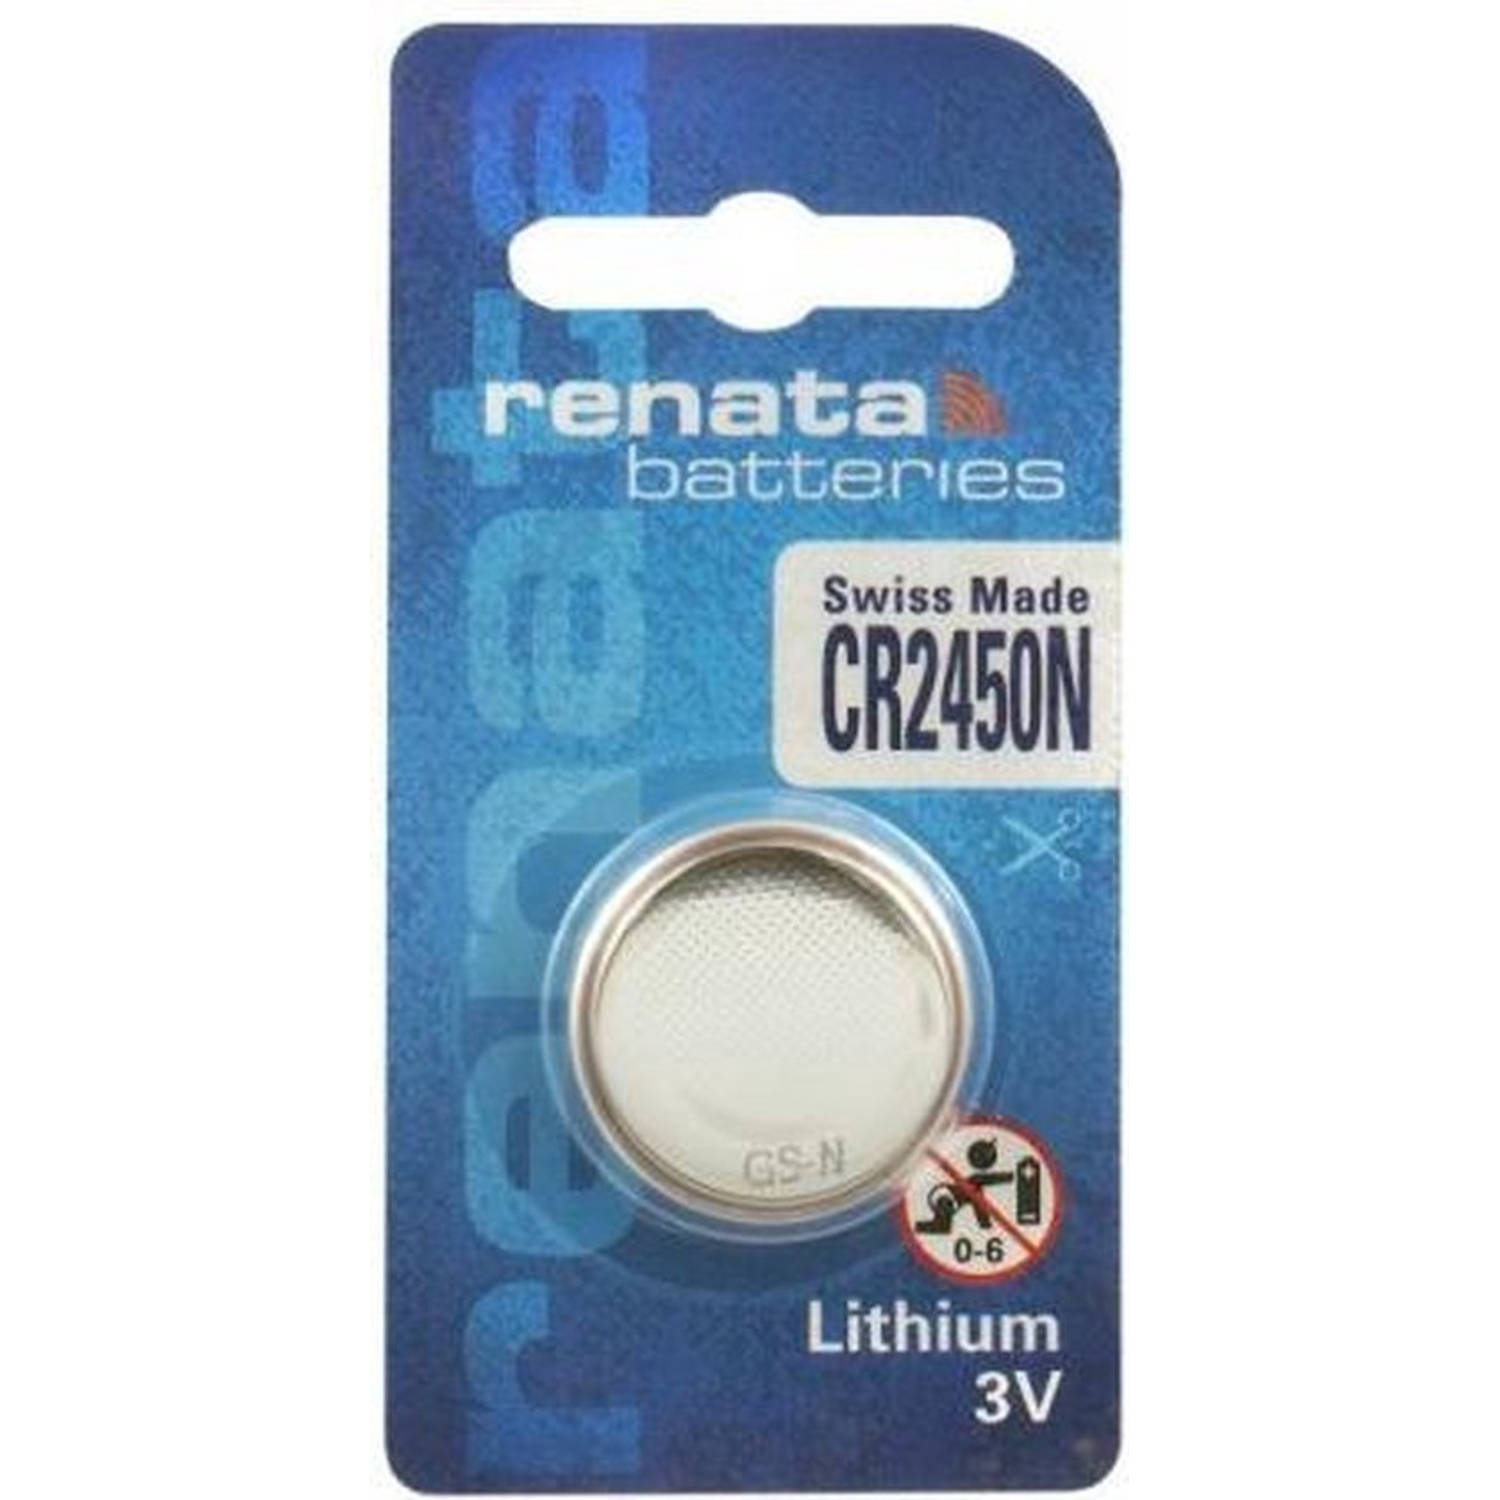 Renata CR2450N 3V Lithium knoopcel batterij - 1 Stuk